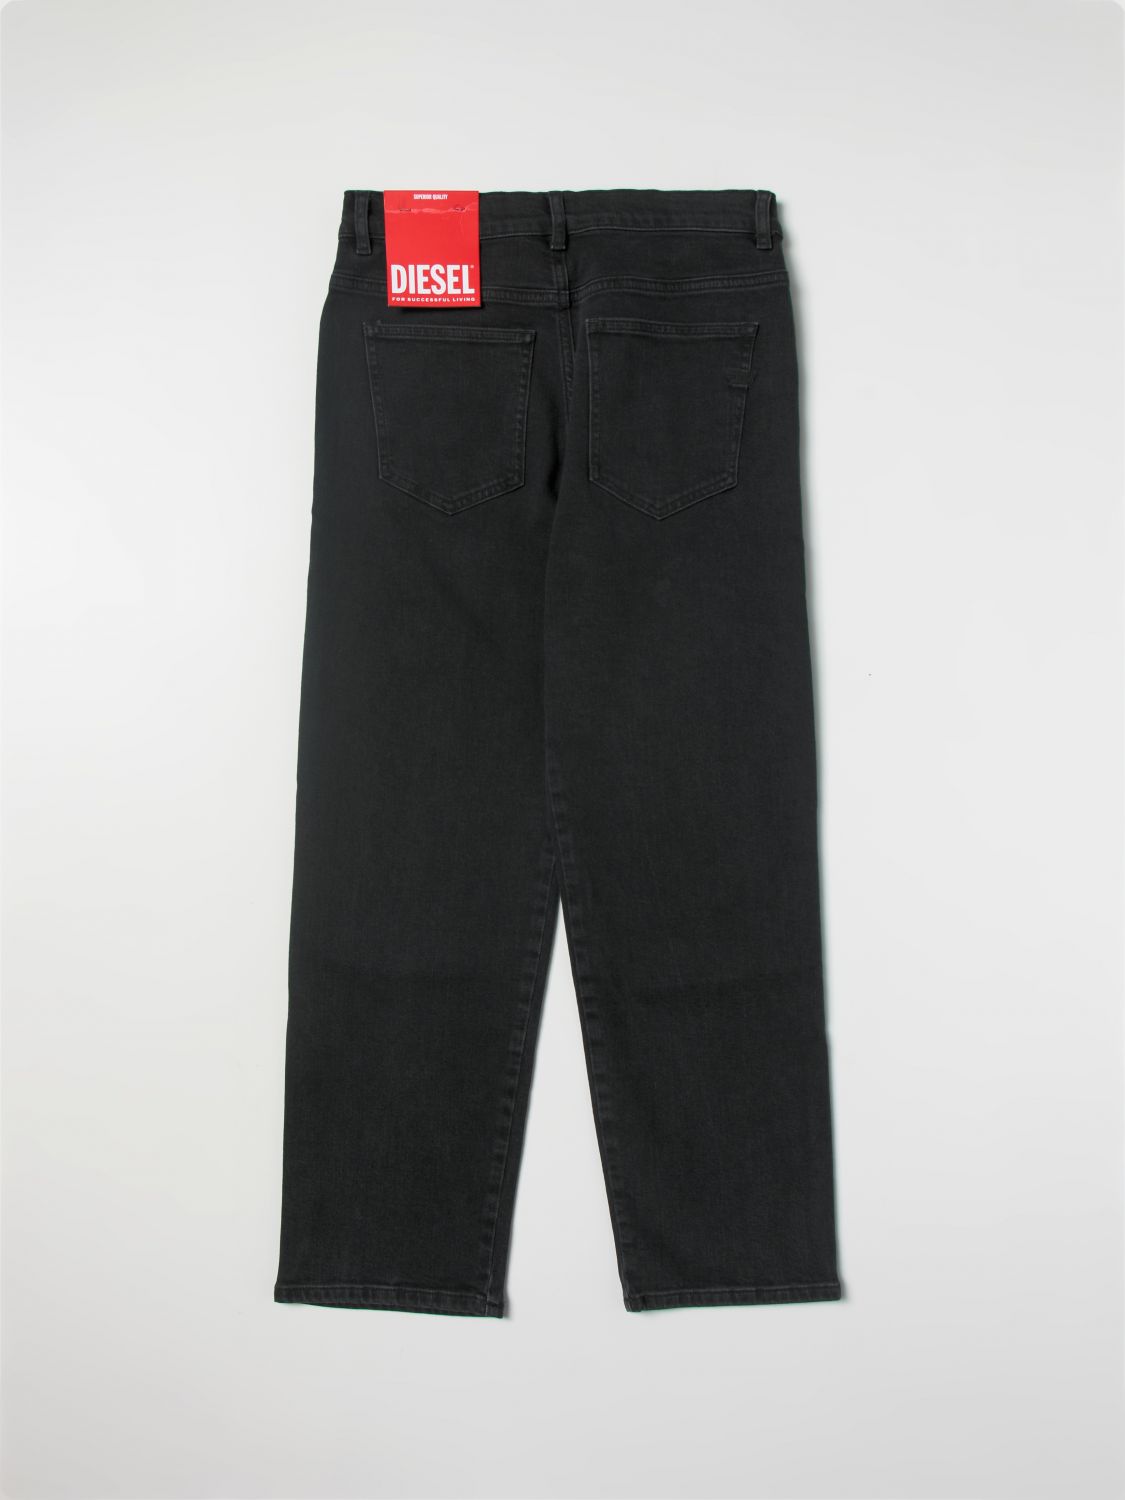 Diesel Outlet: jeans for boys - Black | Diesel jeans J00817KXBDD